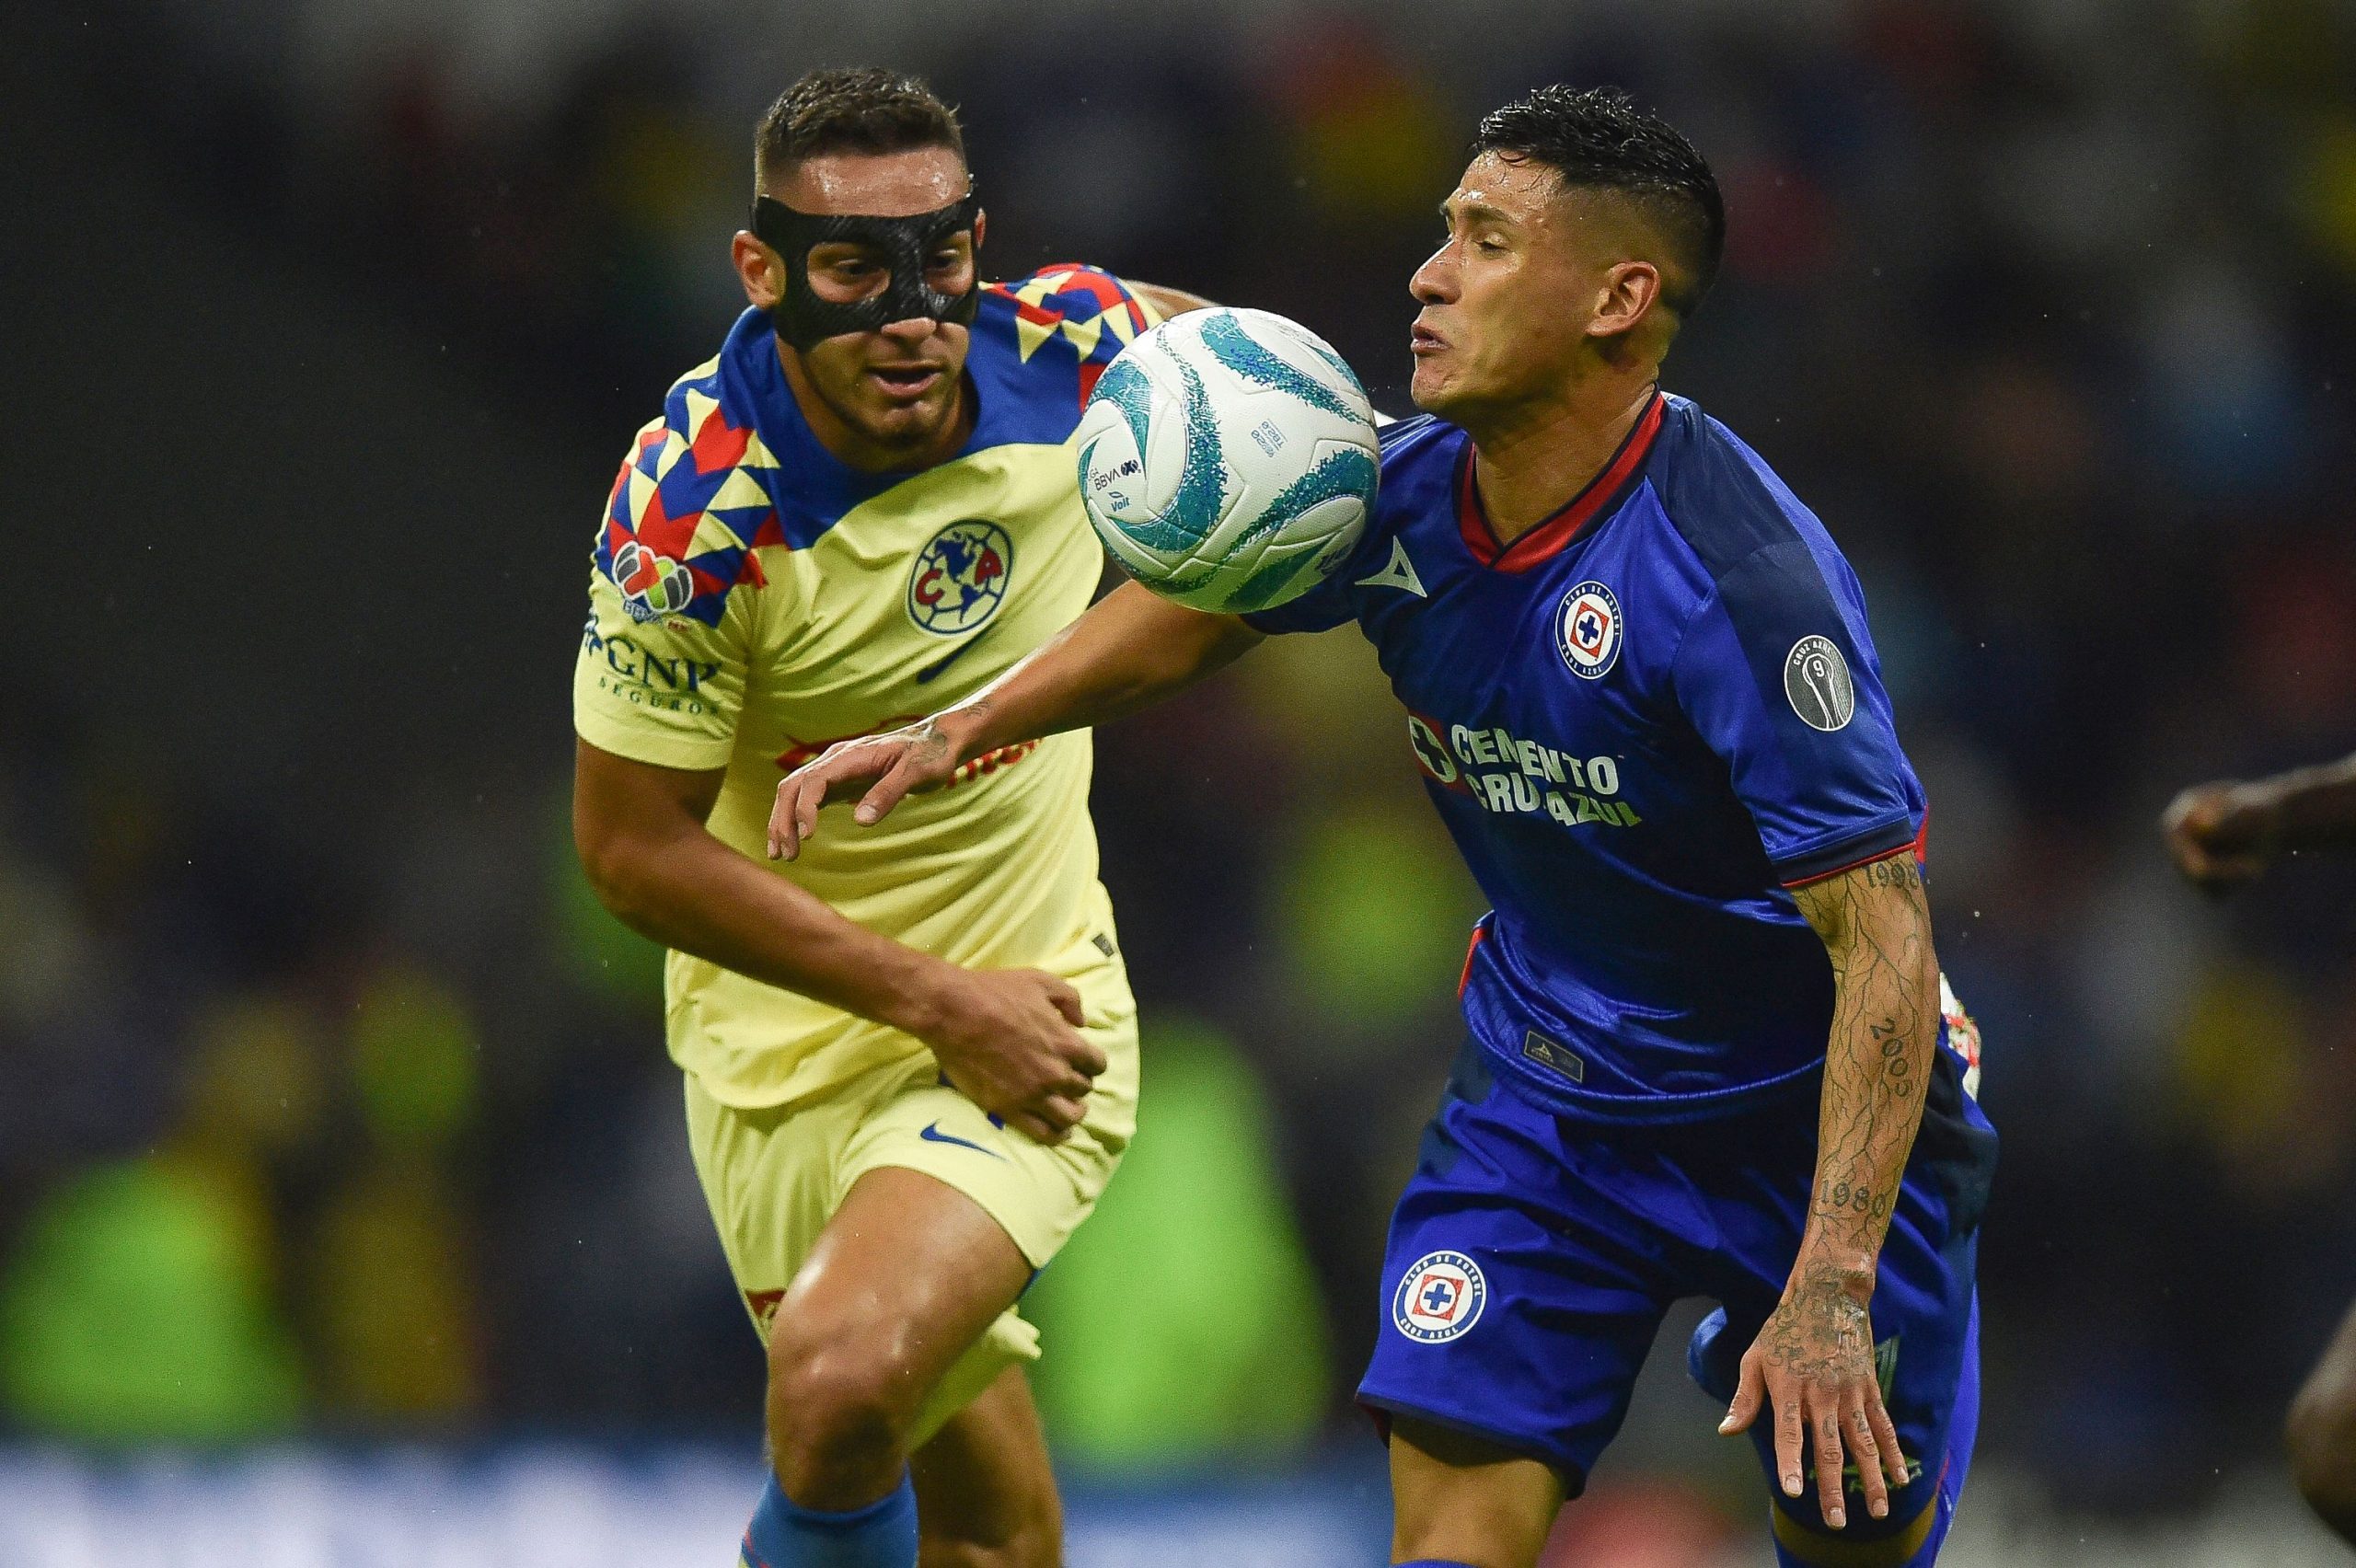 America's defender Sebastian Caceres (L) fights for the ball with Cruz Azul's forward Carlos Antuna. (Photo by RODRIGO OROPEZA/AFP via Getty Images)